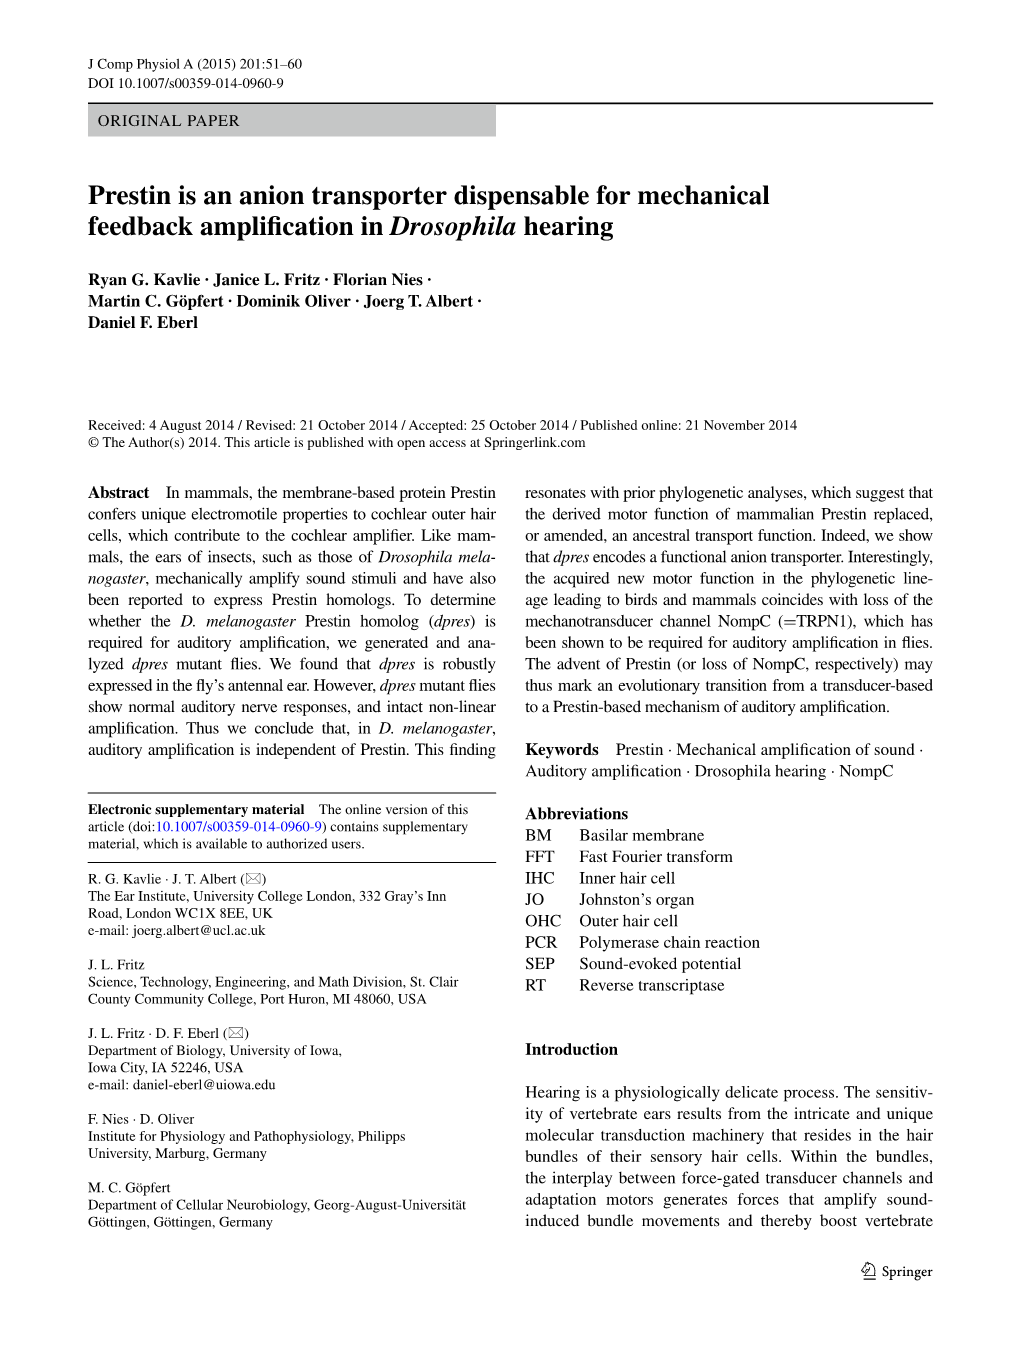 Prestin Is an Anion Transporter Dispensable for Mechanical Feedback Amplification in Drosophila Hearing